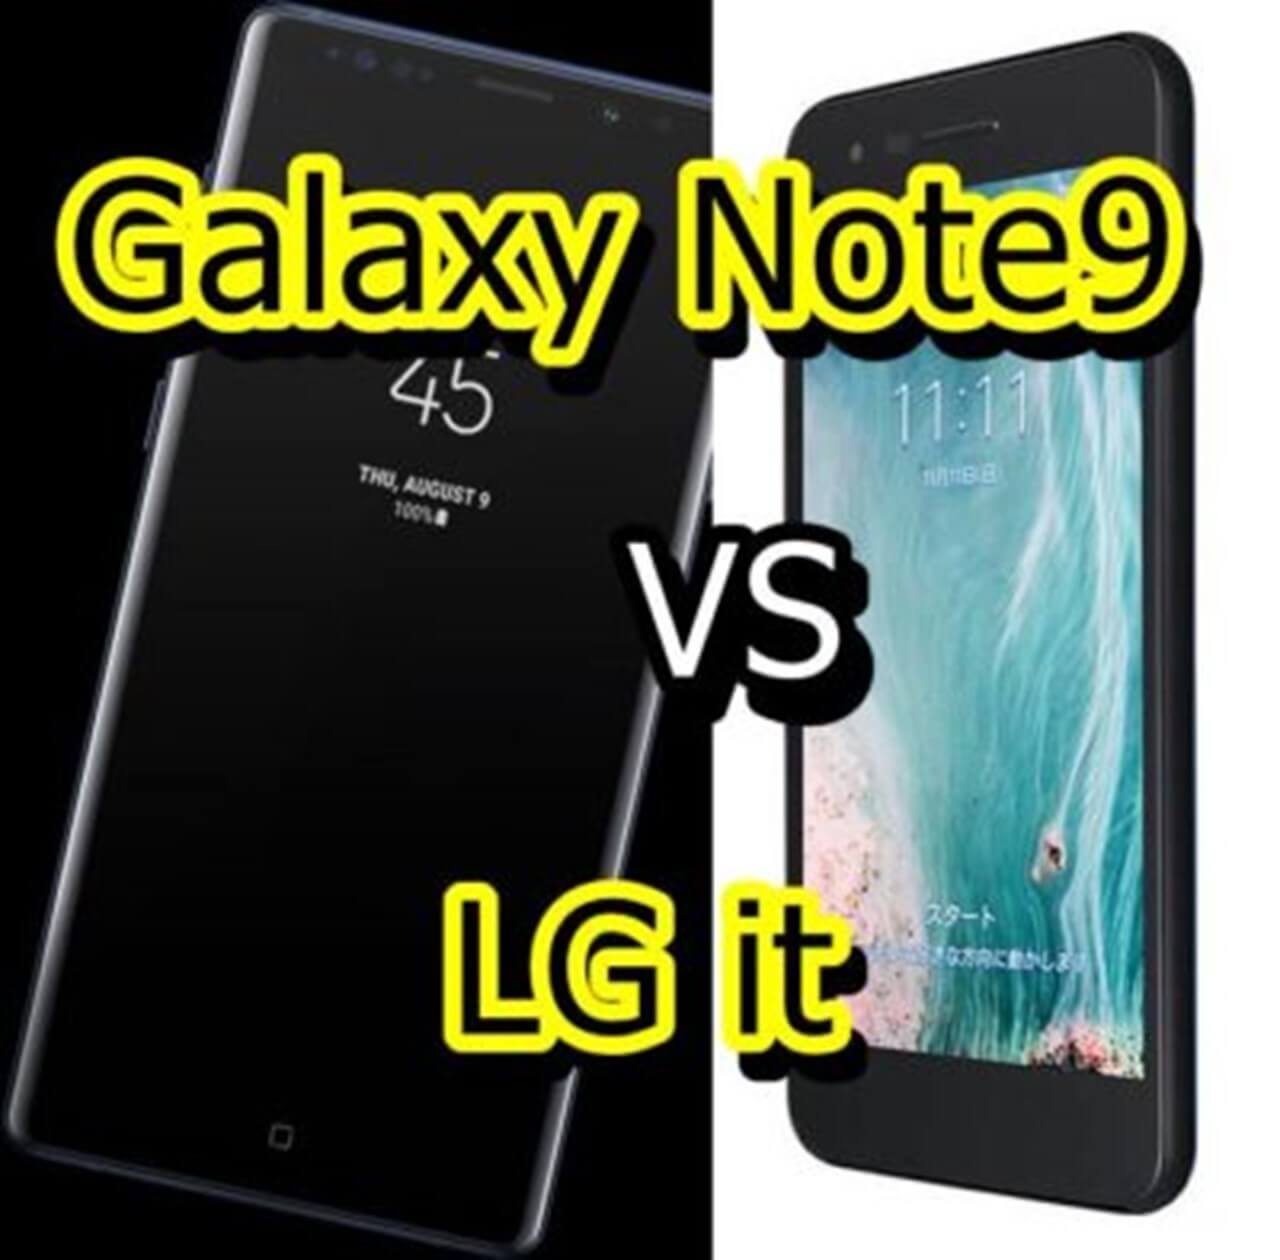 s-galaxy note9 vs lgit